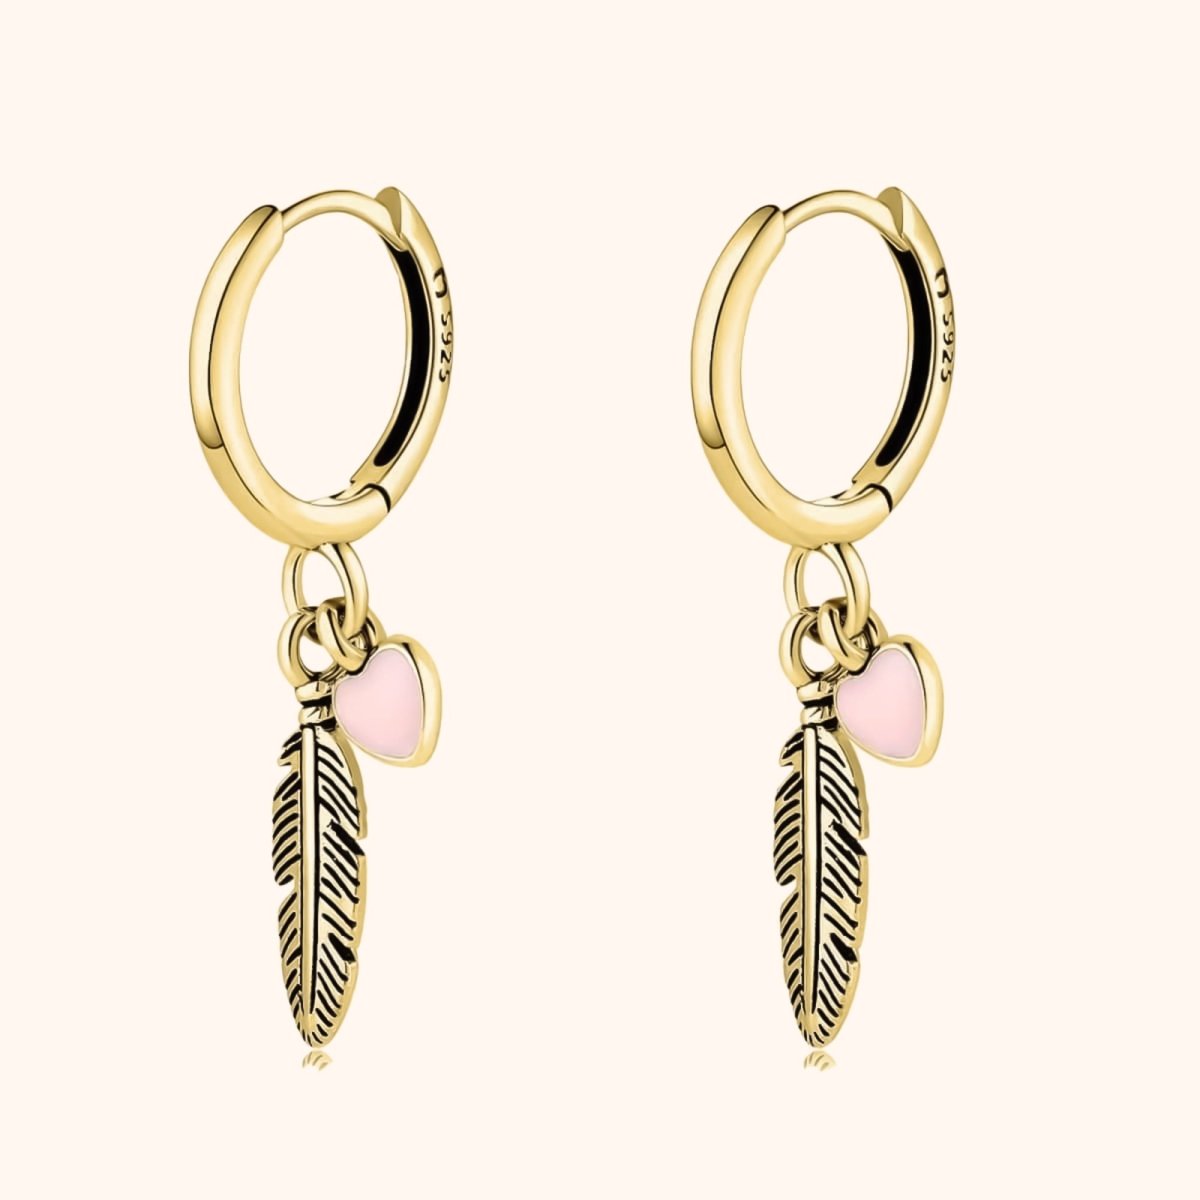 "Feathers of Love" Earrings - Milas Jewels Shop